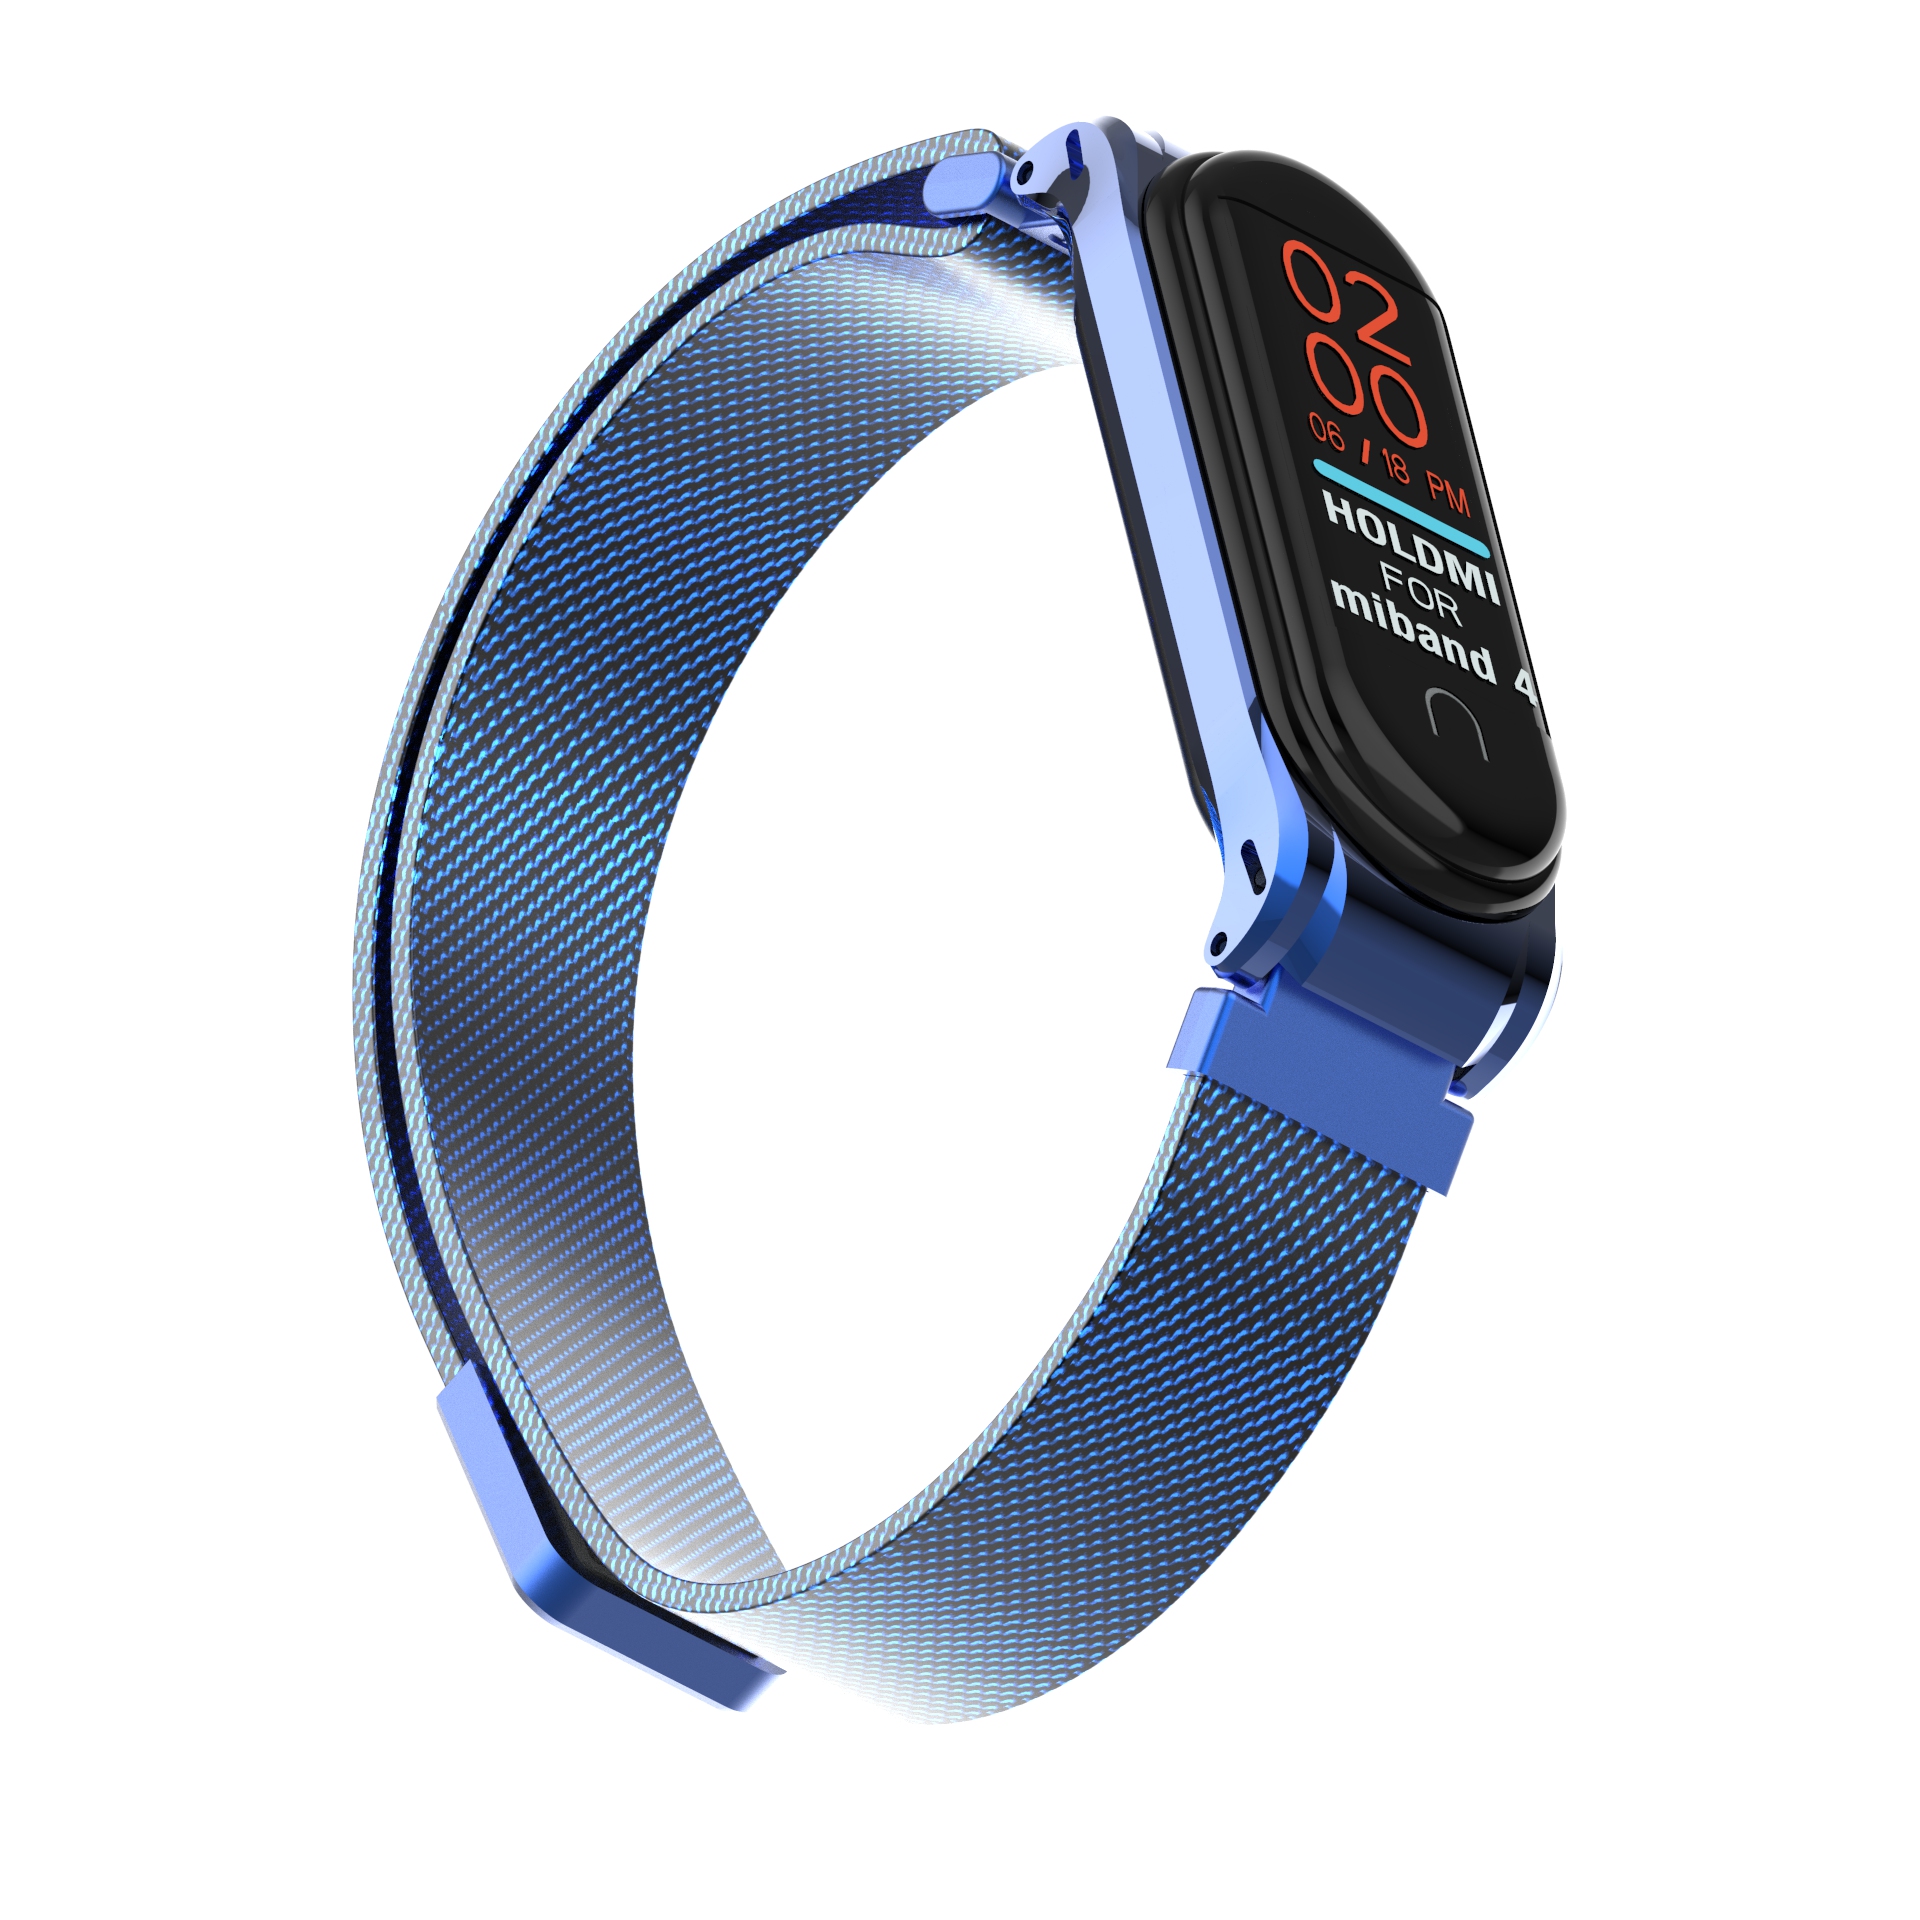 Bakeey-Milan-Stainless-Steel-Watch-Band-for-Xiaomi-mi-band-34-Smart-Watch-Non-original-1555793-3